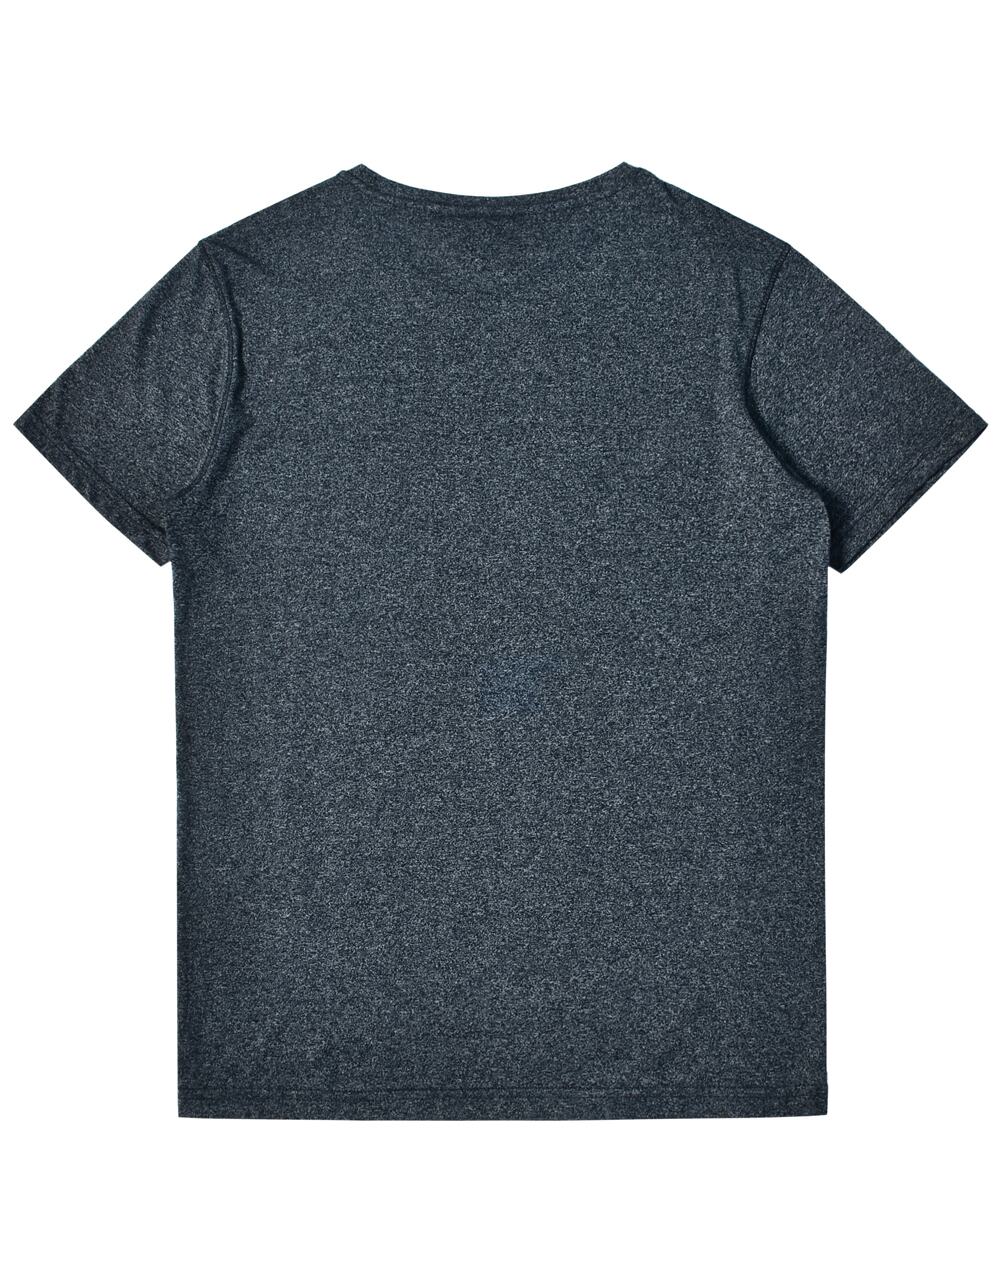 Custom Styles (Grey) Mens Heather T-Shirts Online in Perth Australia